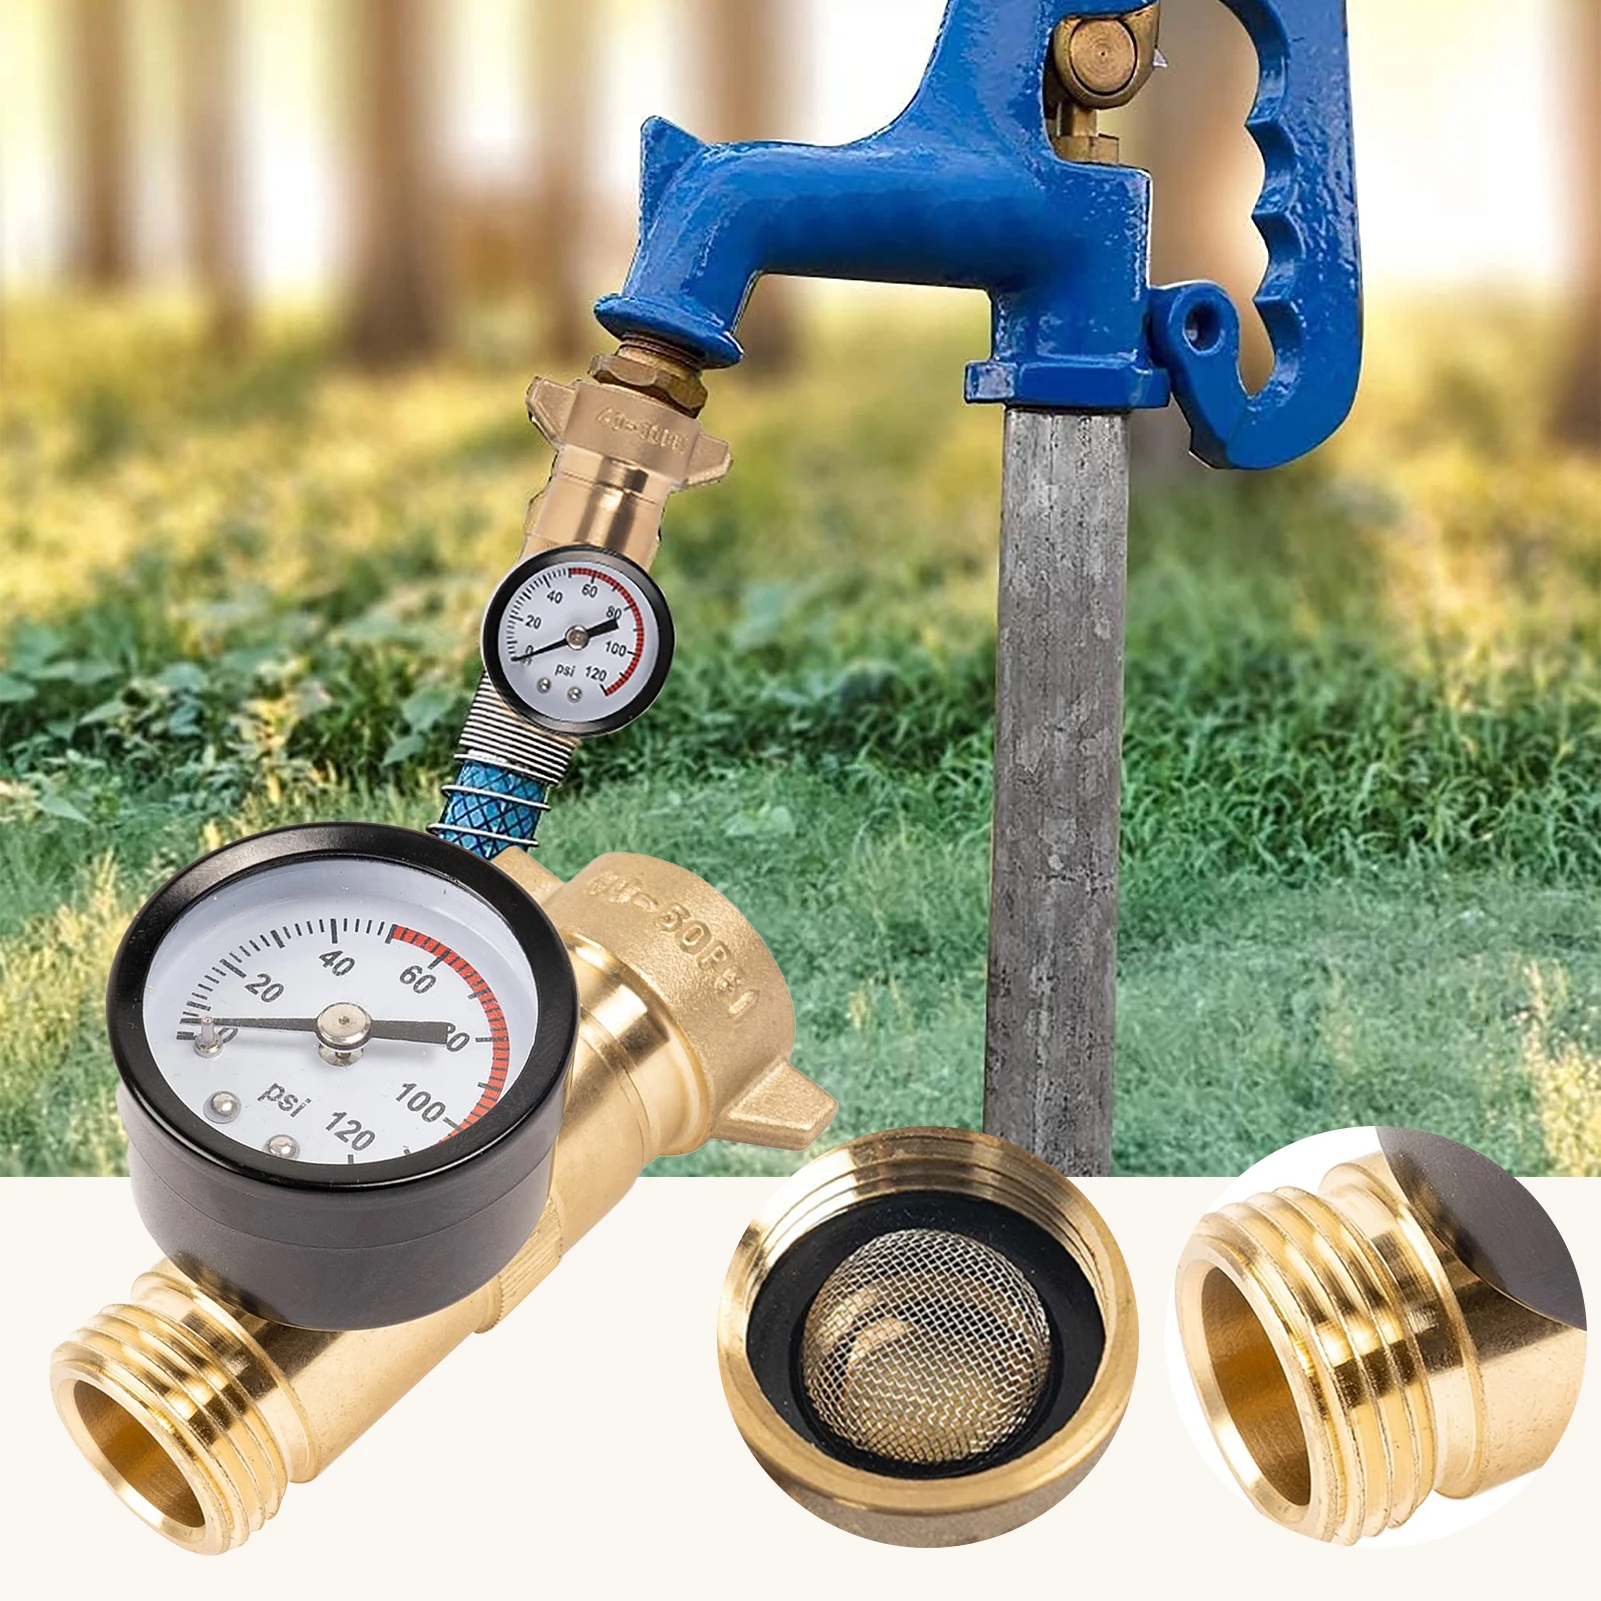 

RV High-Flow Water Pressure Regulator Easy Installation Pressure Reducer For Camping